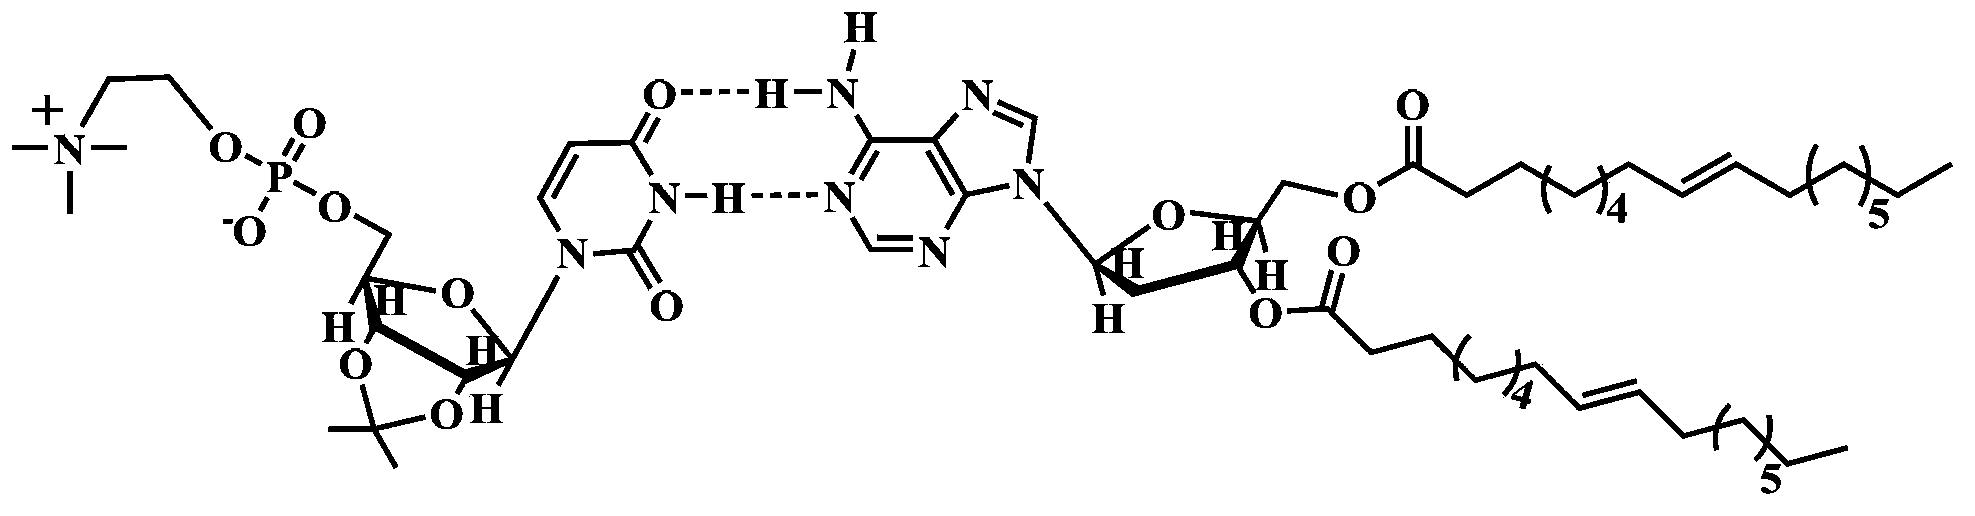 Supermolecule phospholipid based on nucleic acid bases, preparation method of supermolecule phospholipid and liposome